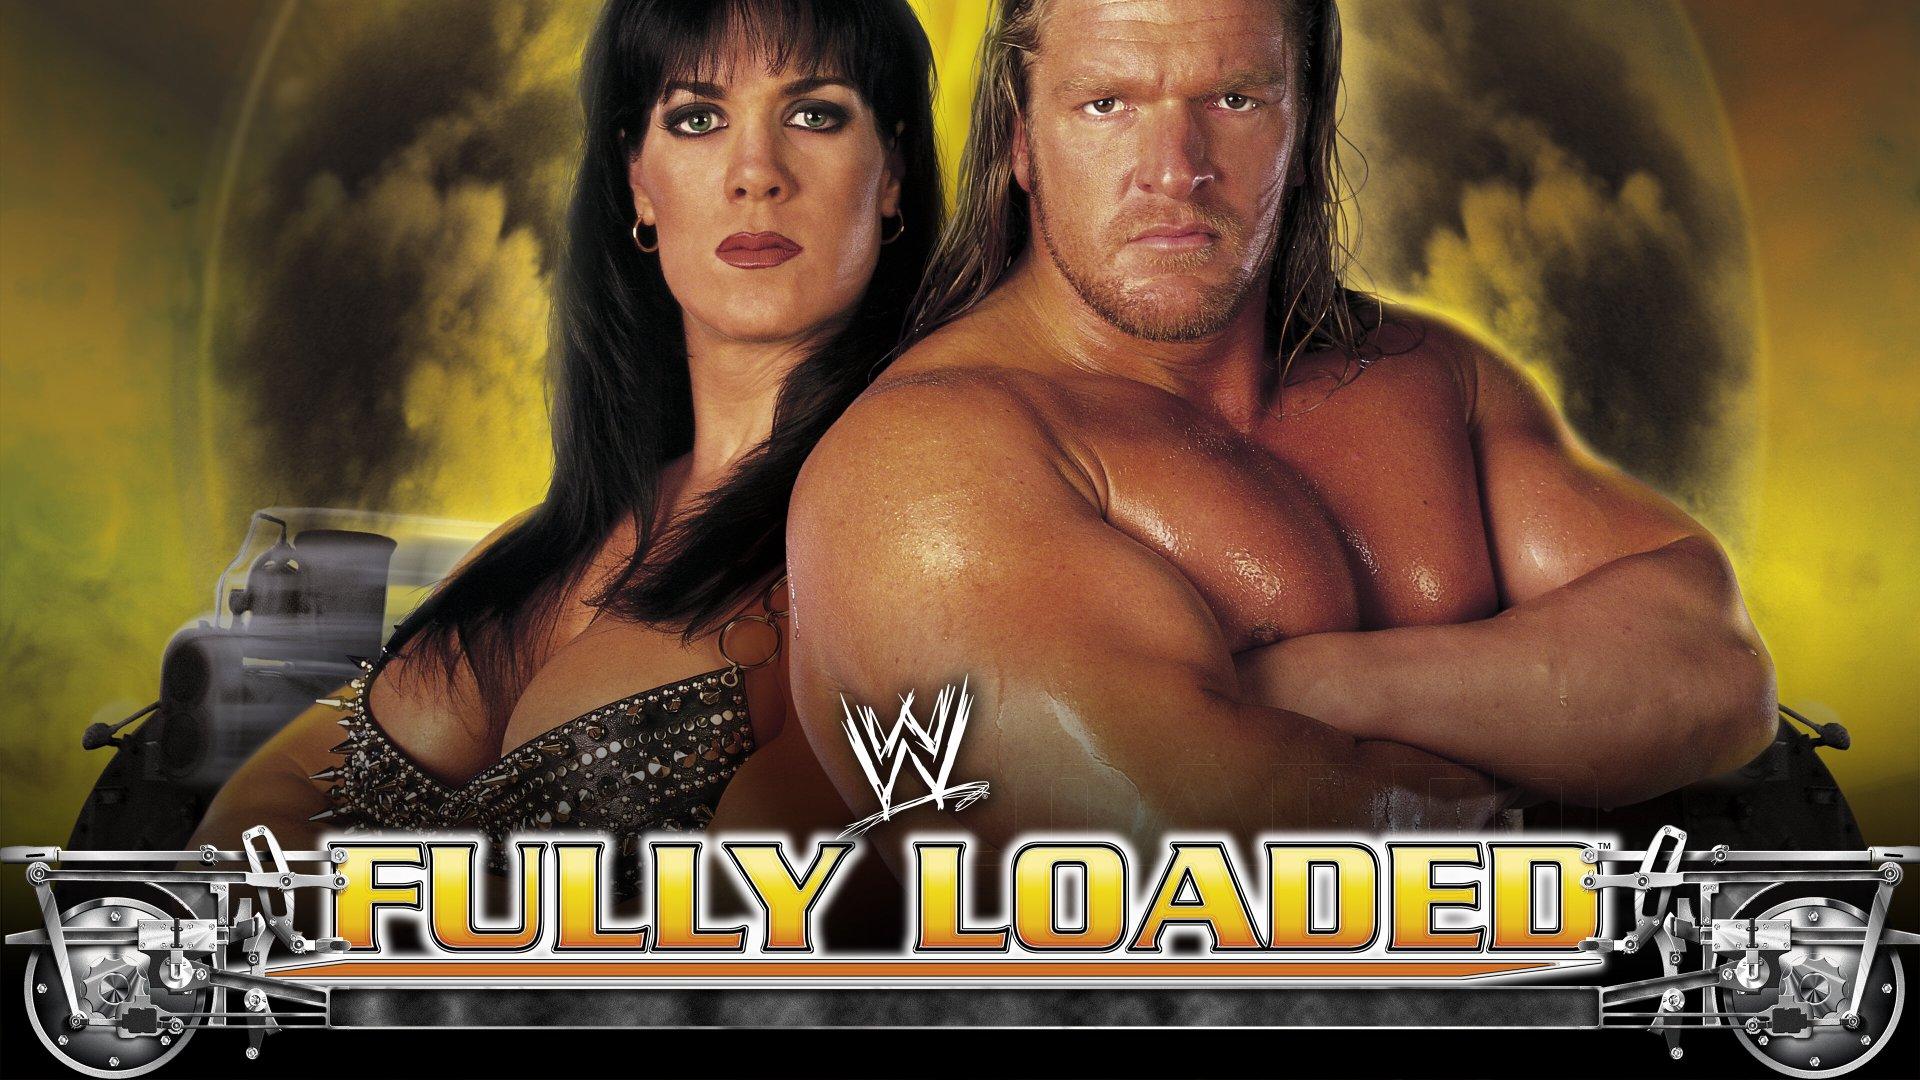 WWF Fully Loaded 1999